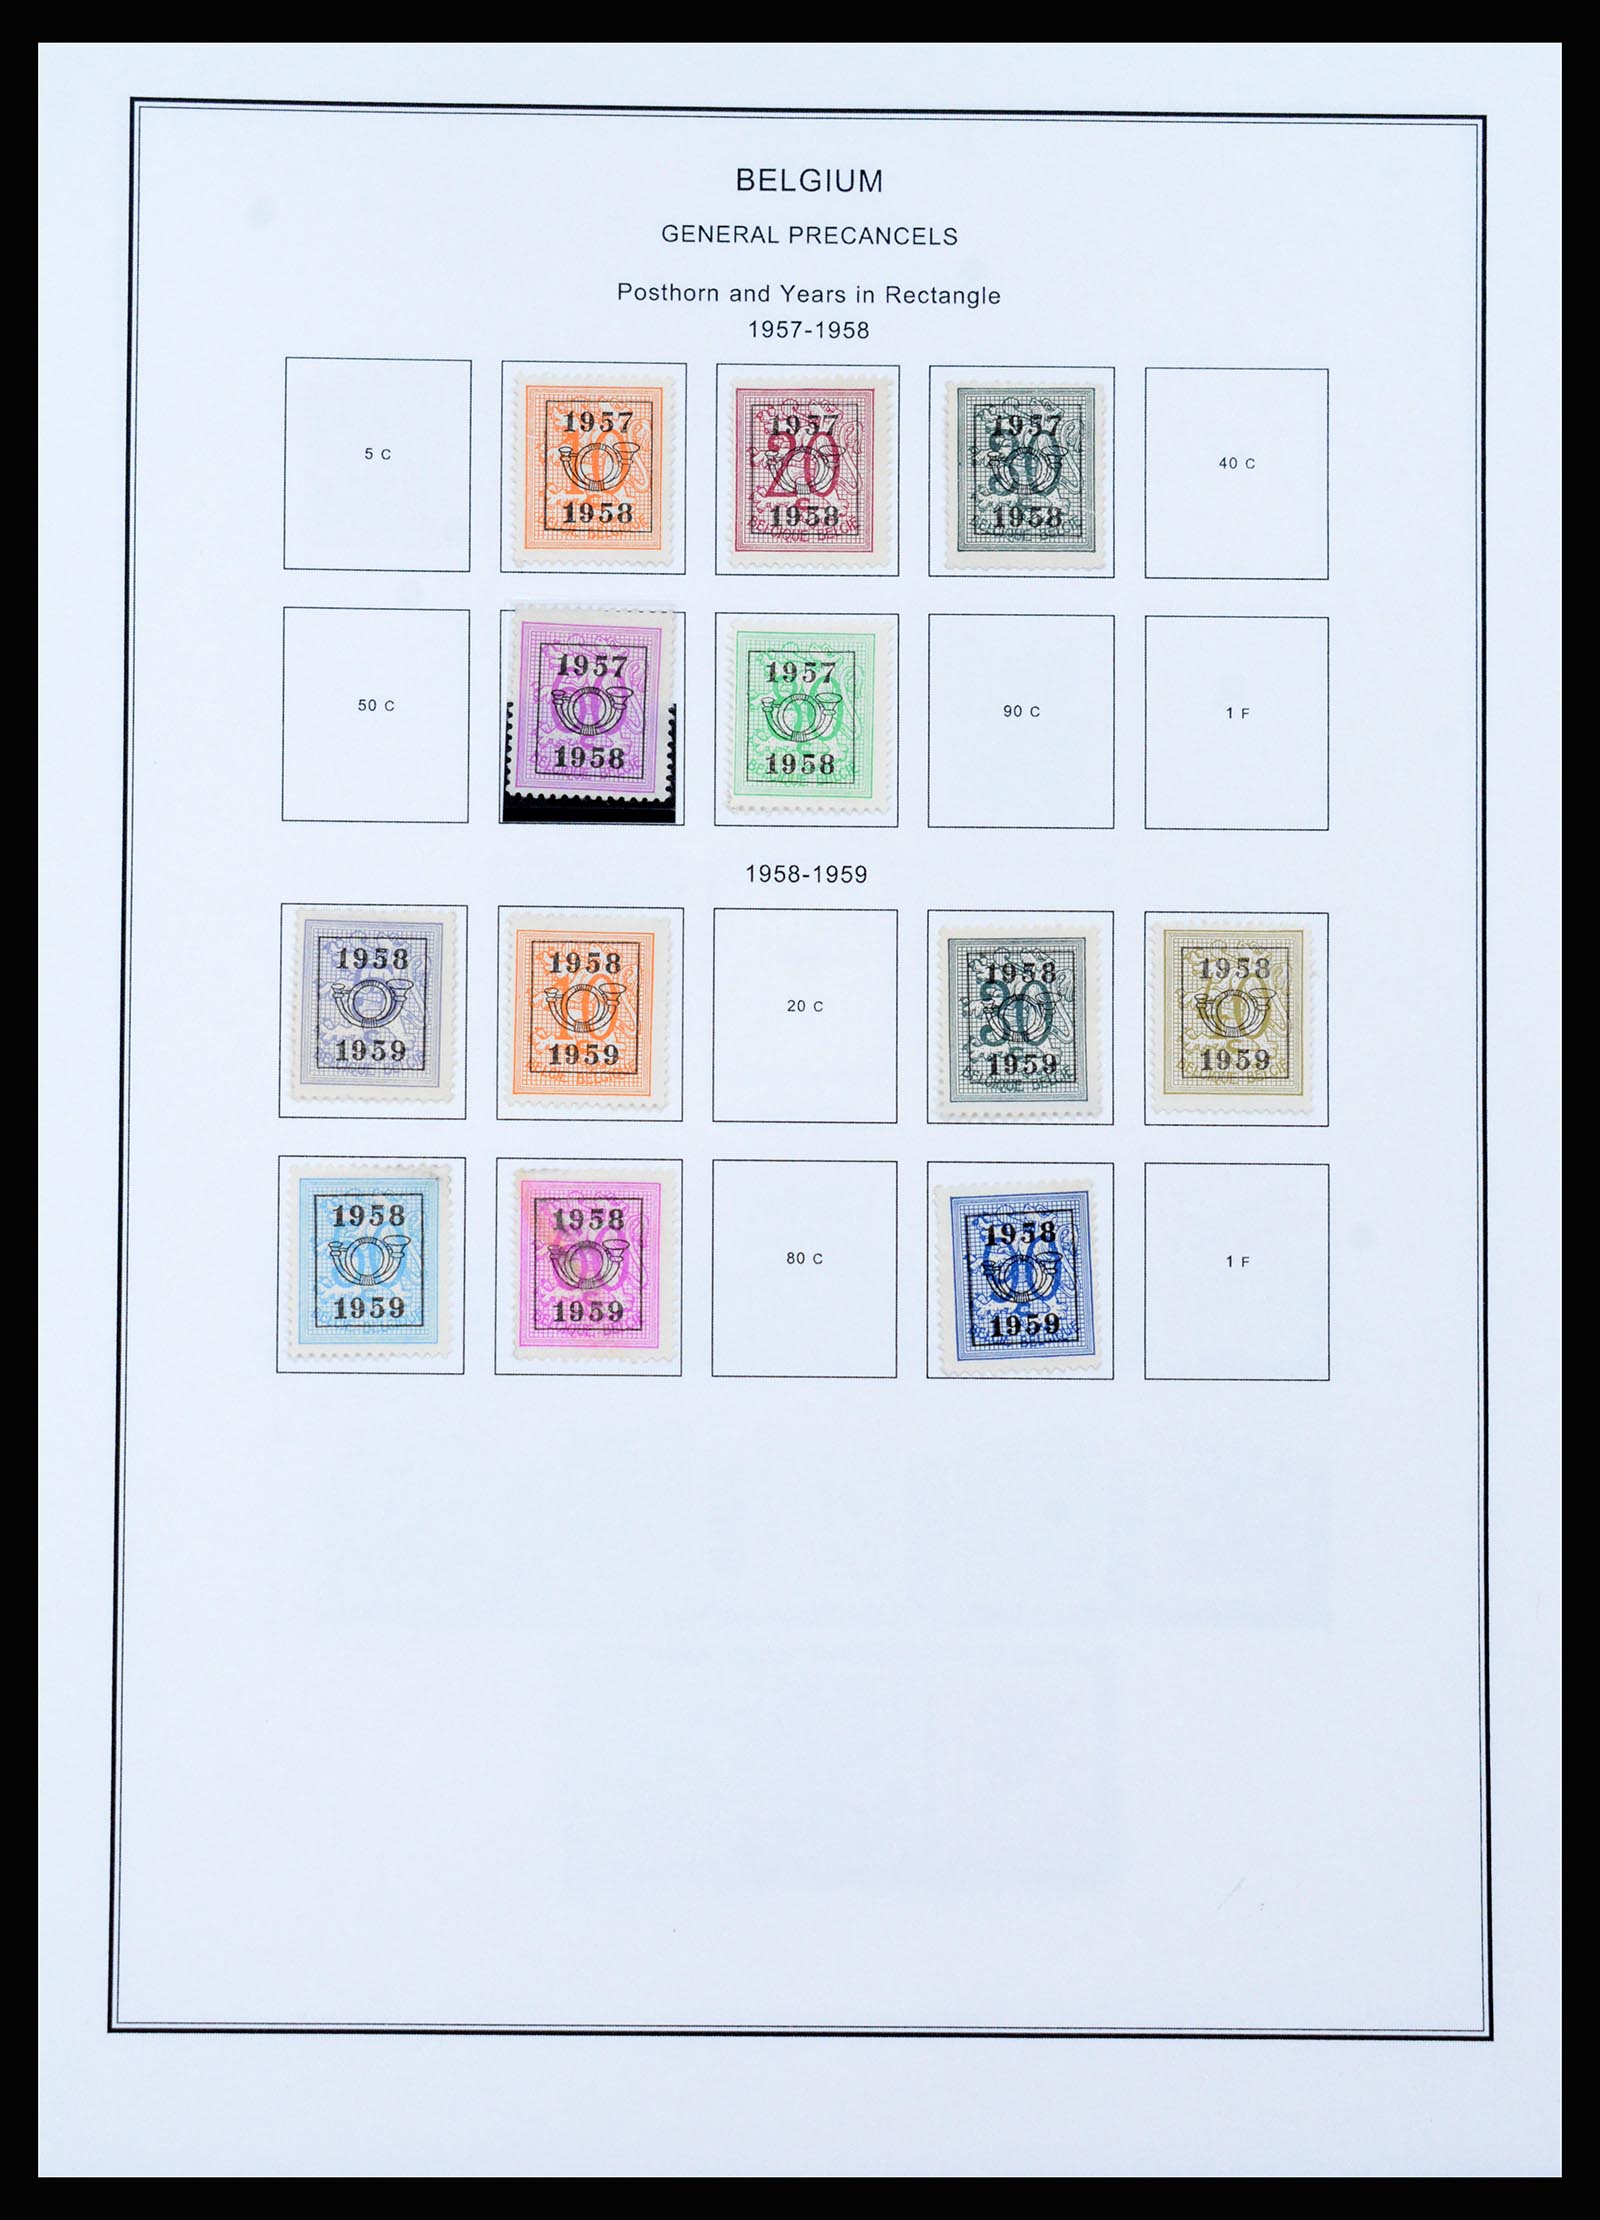 37240 389 - Stamp collection 37240 Belgium 1849-1996.